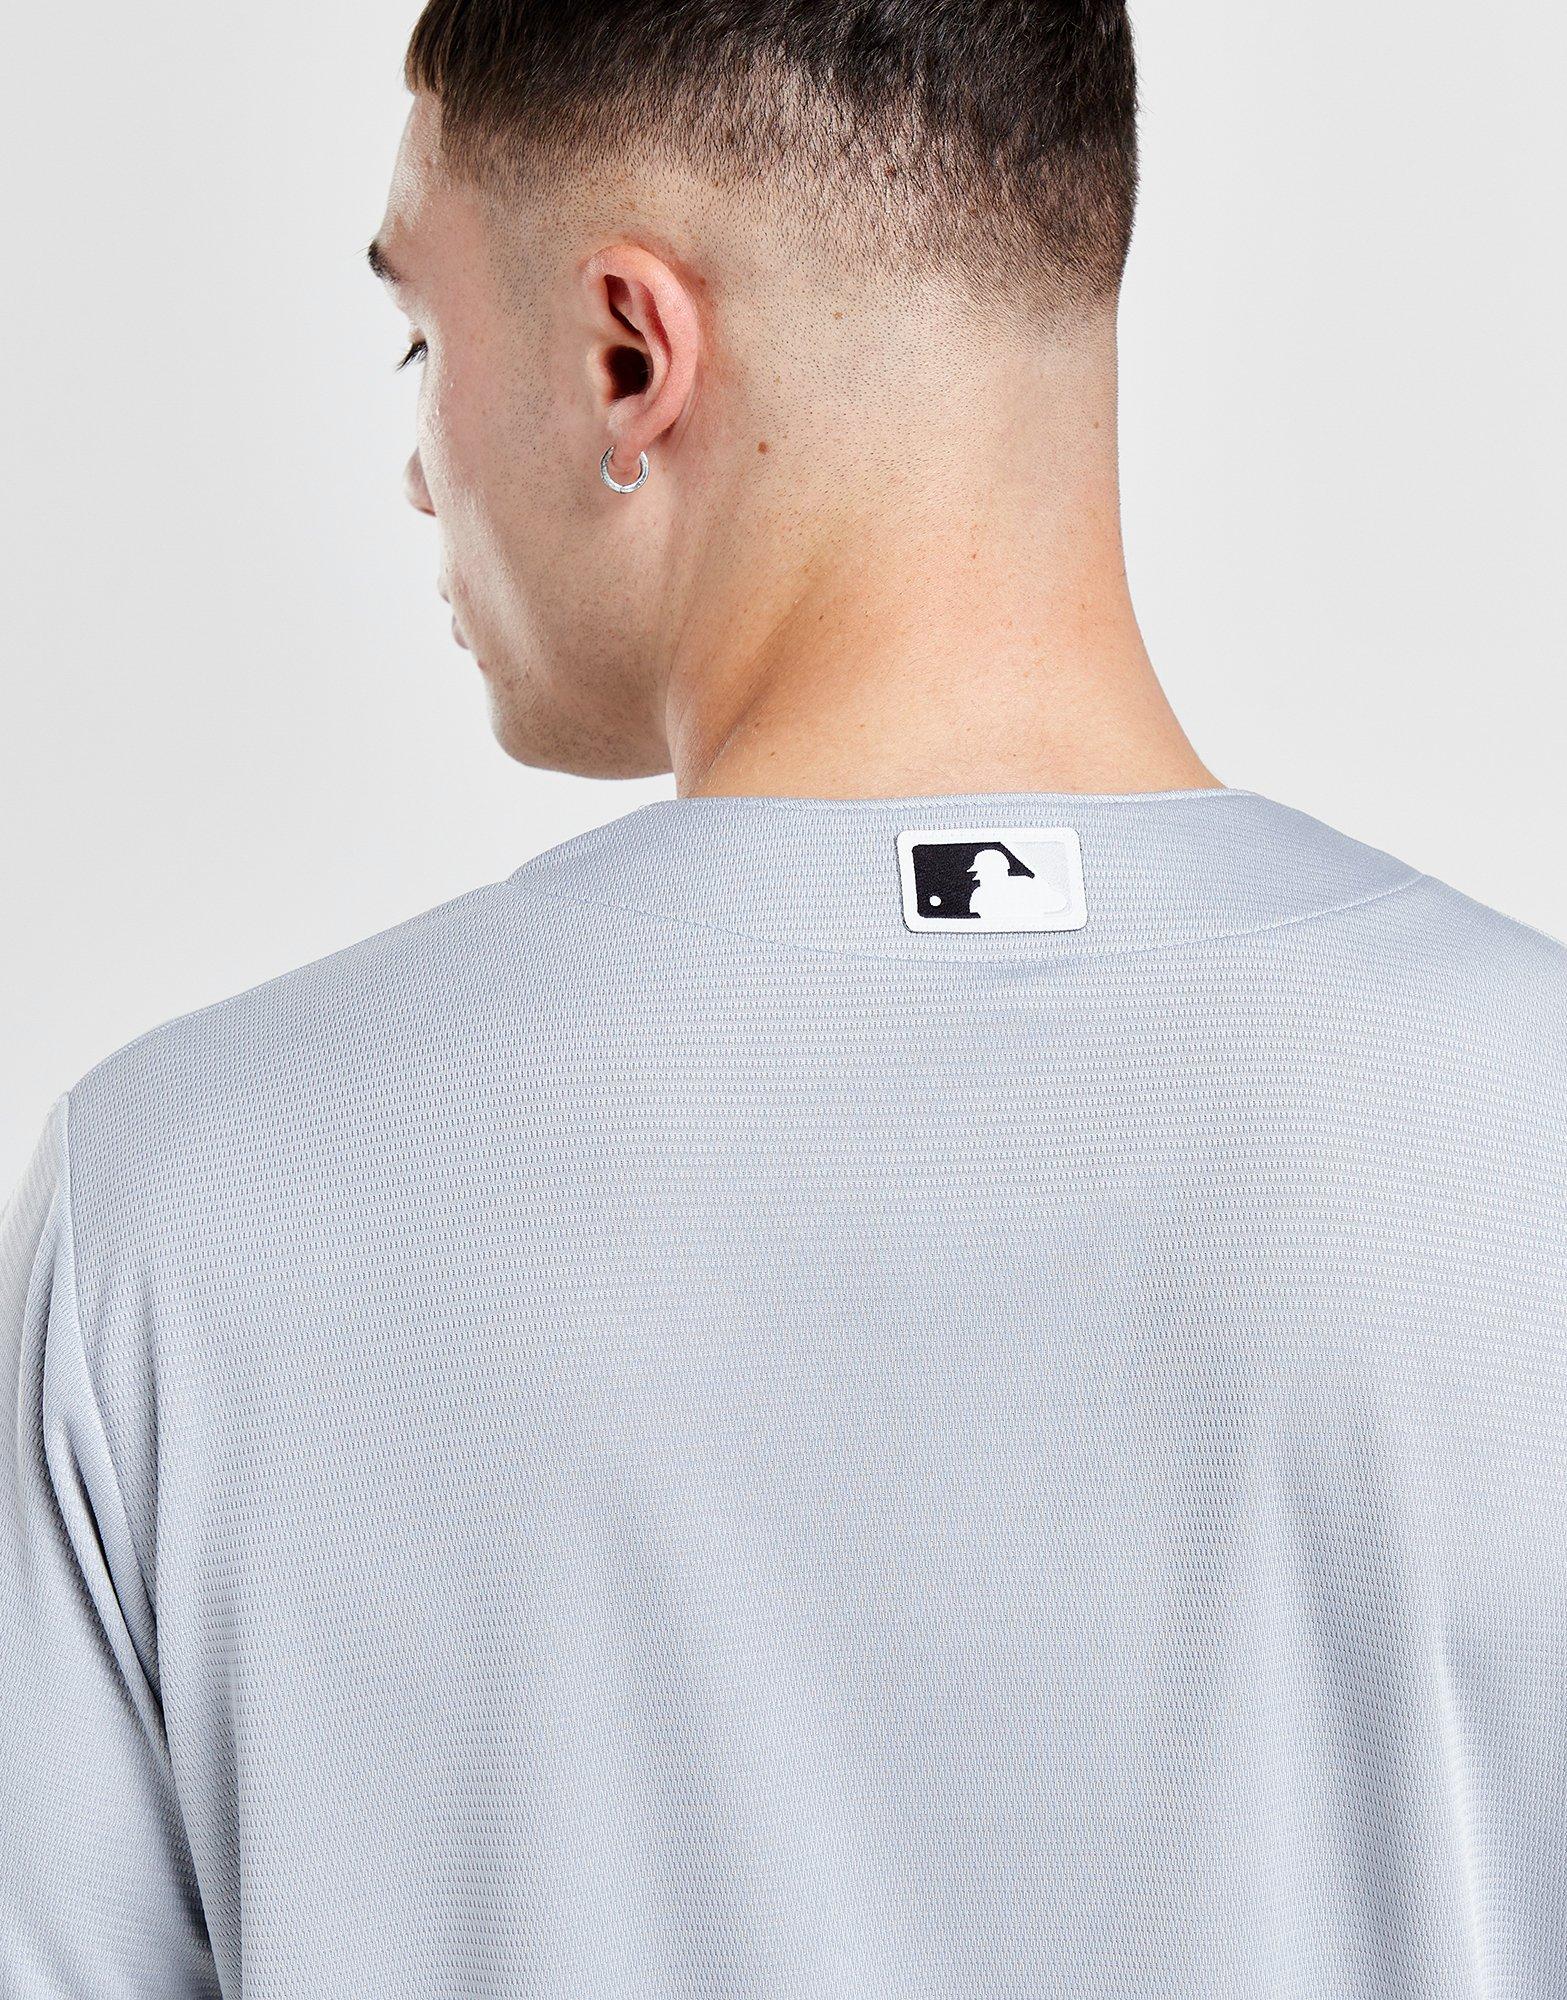 Chicago White Sox Nike Men's Grey Road Replica Jersey